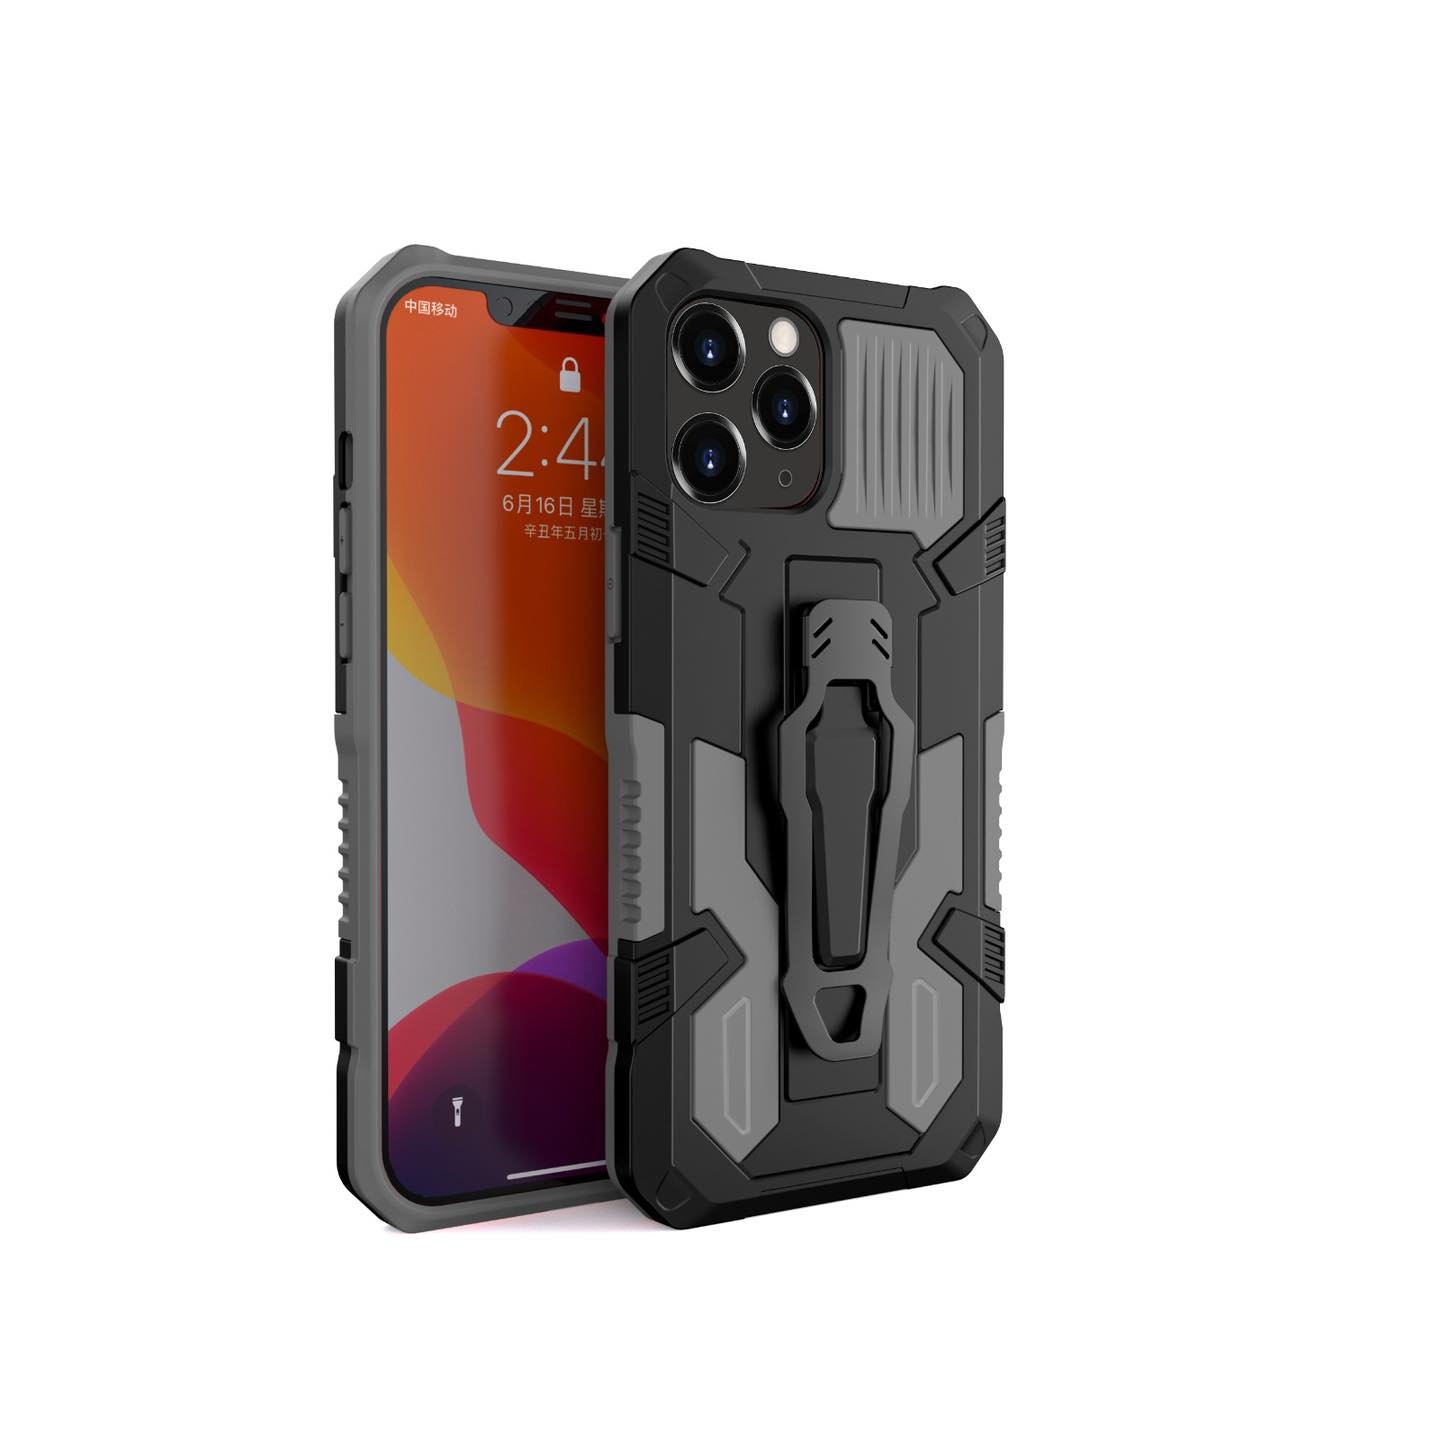 Armor case grey - Iphone